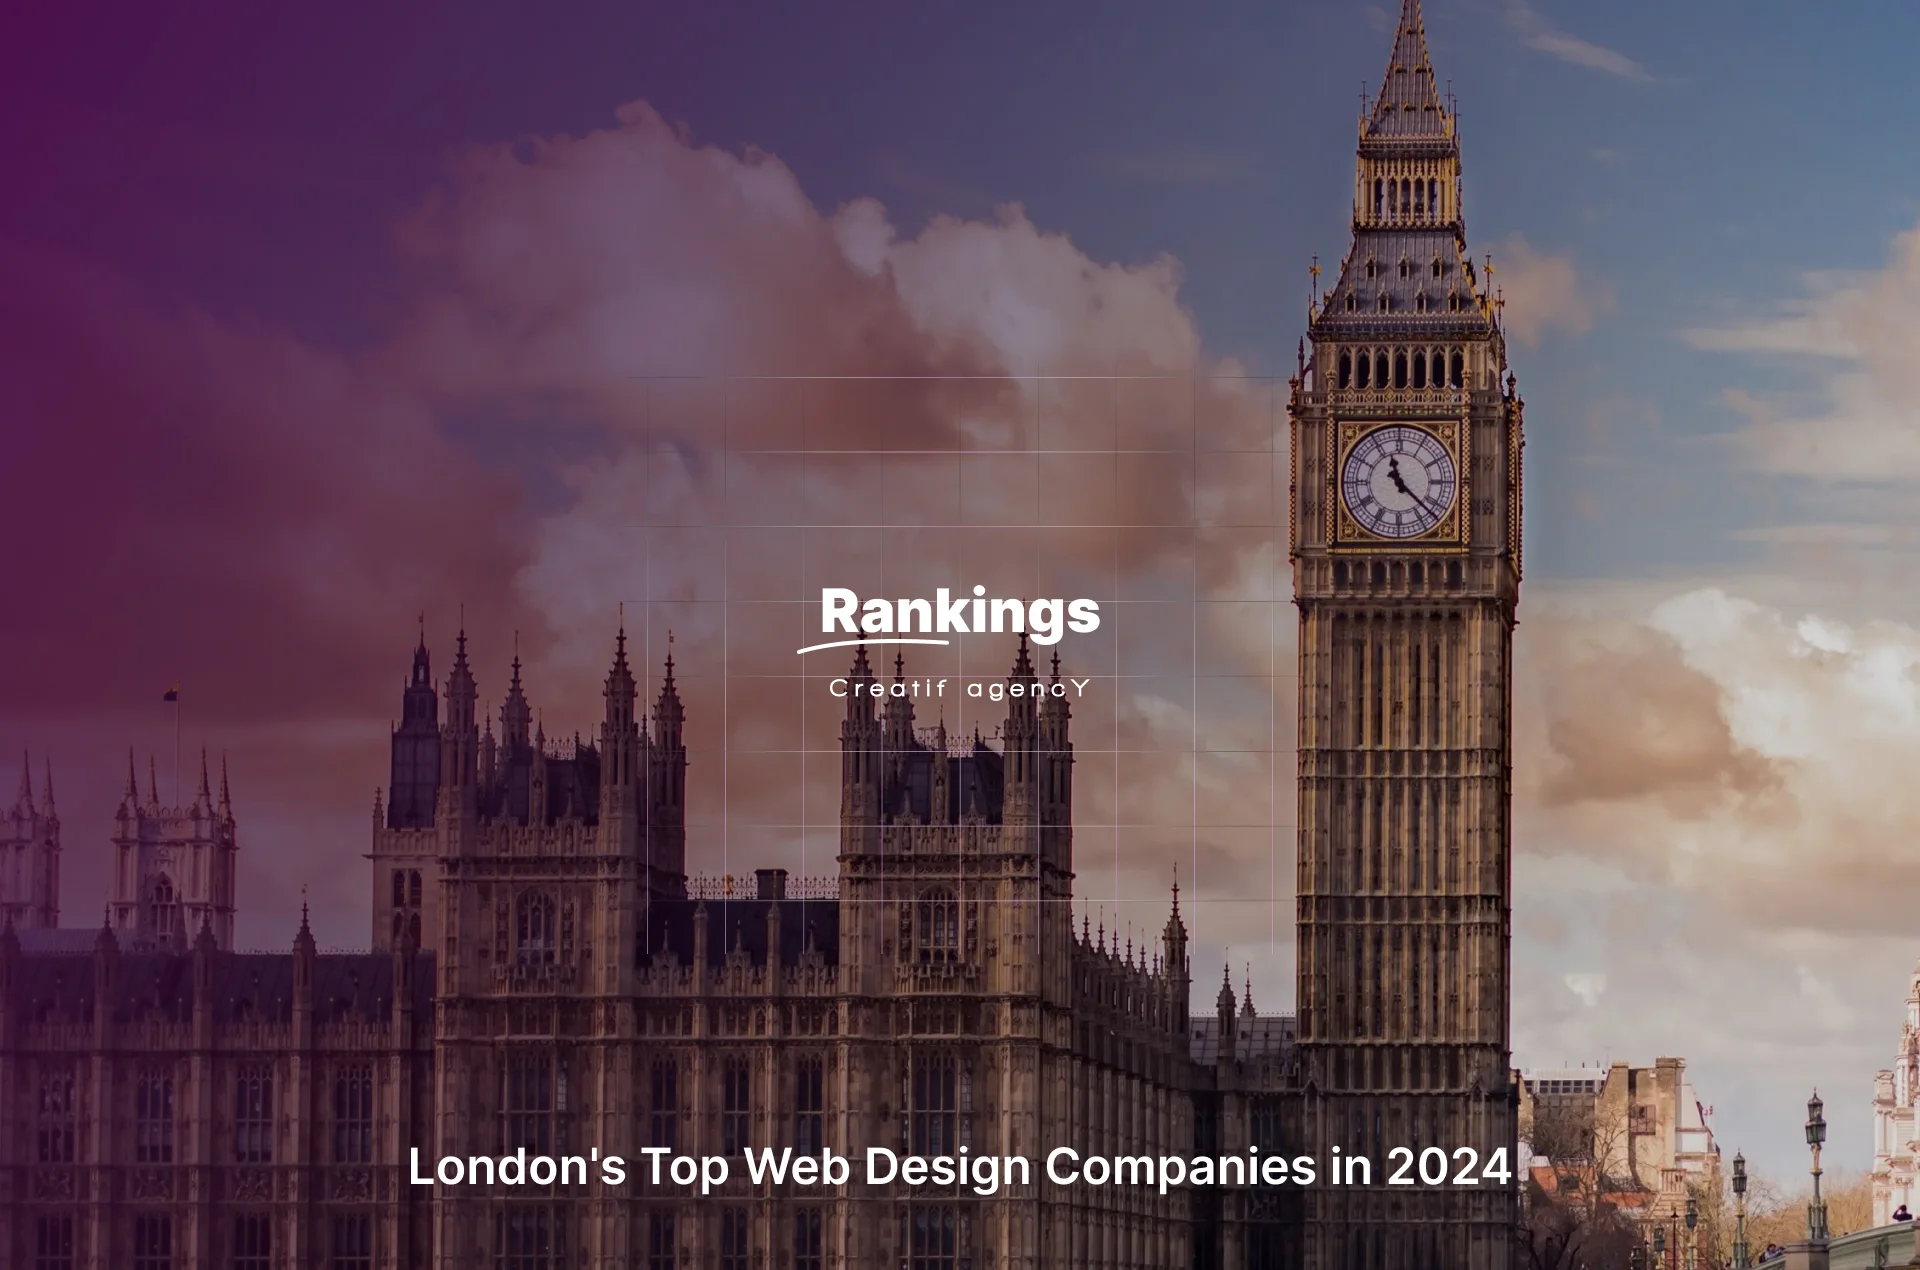 London's Top Web Design Companies in 2024